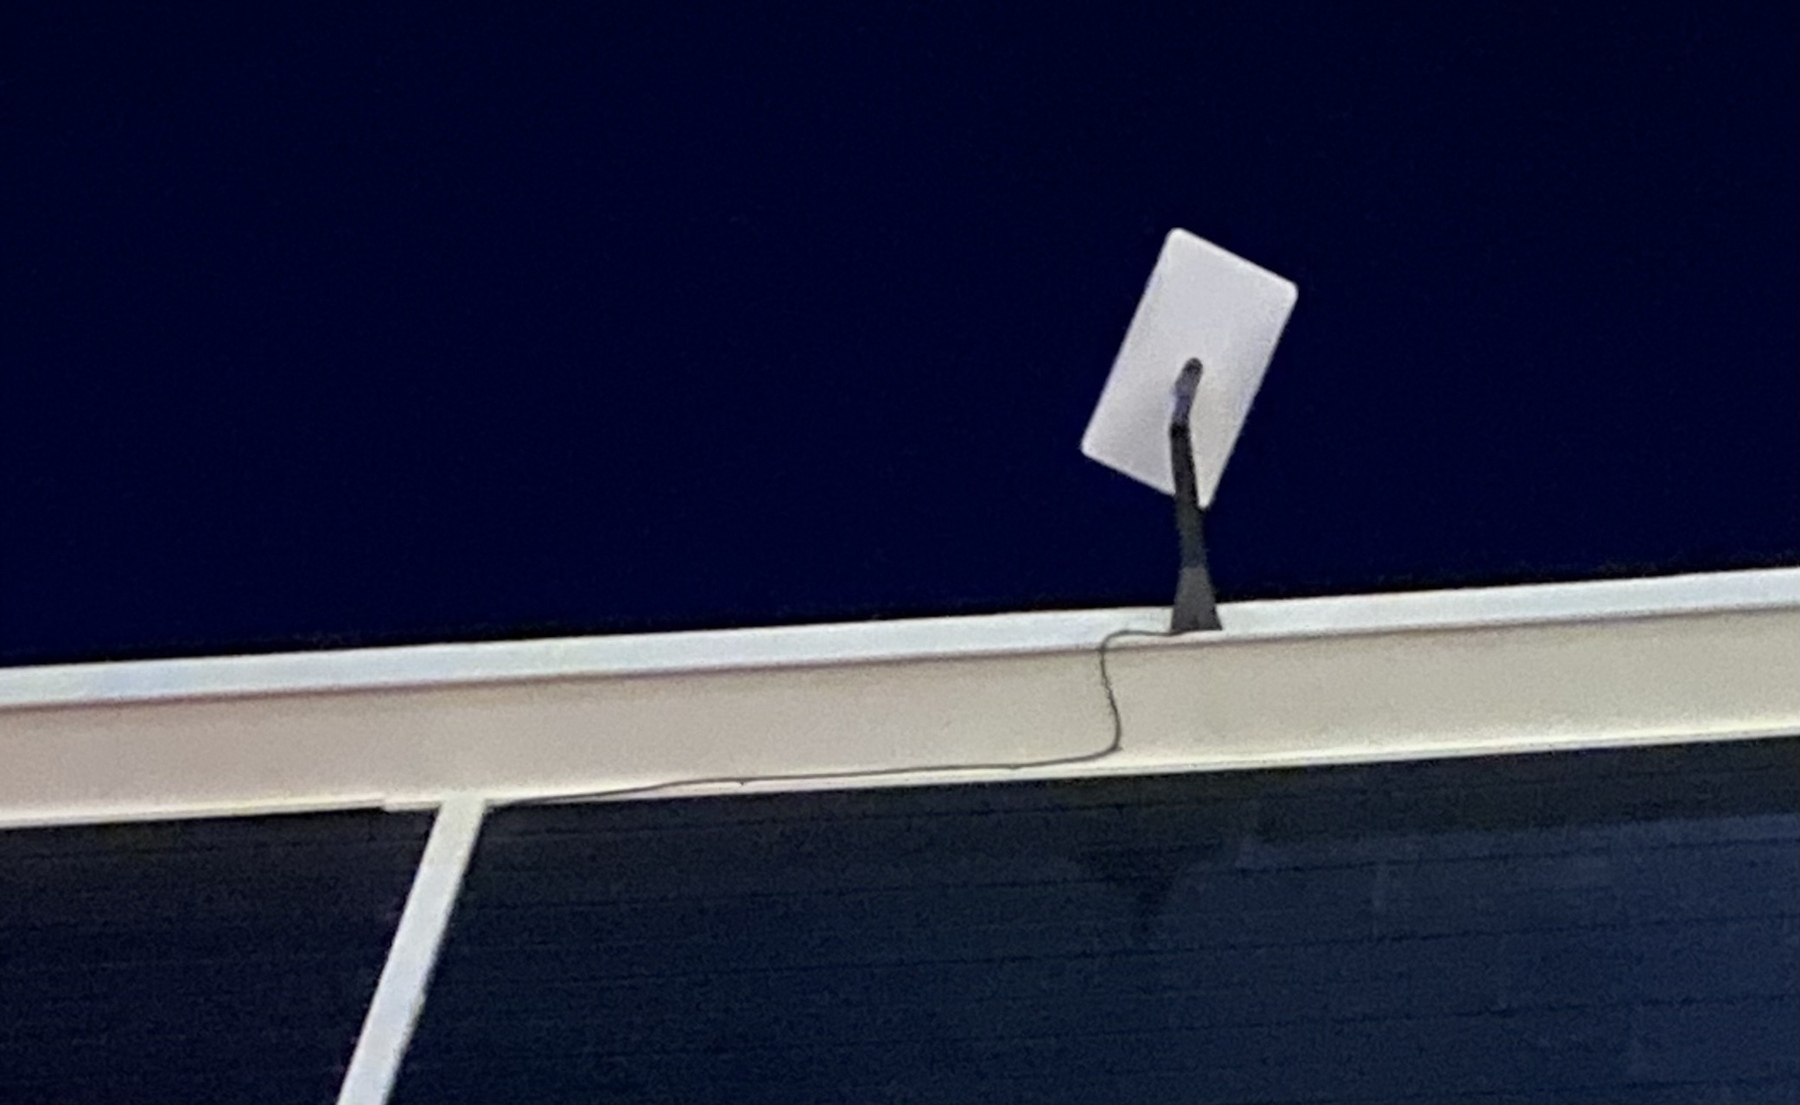 StarLink antenna against a night sky